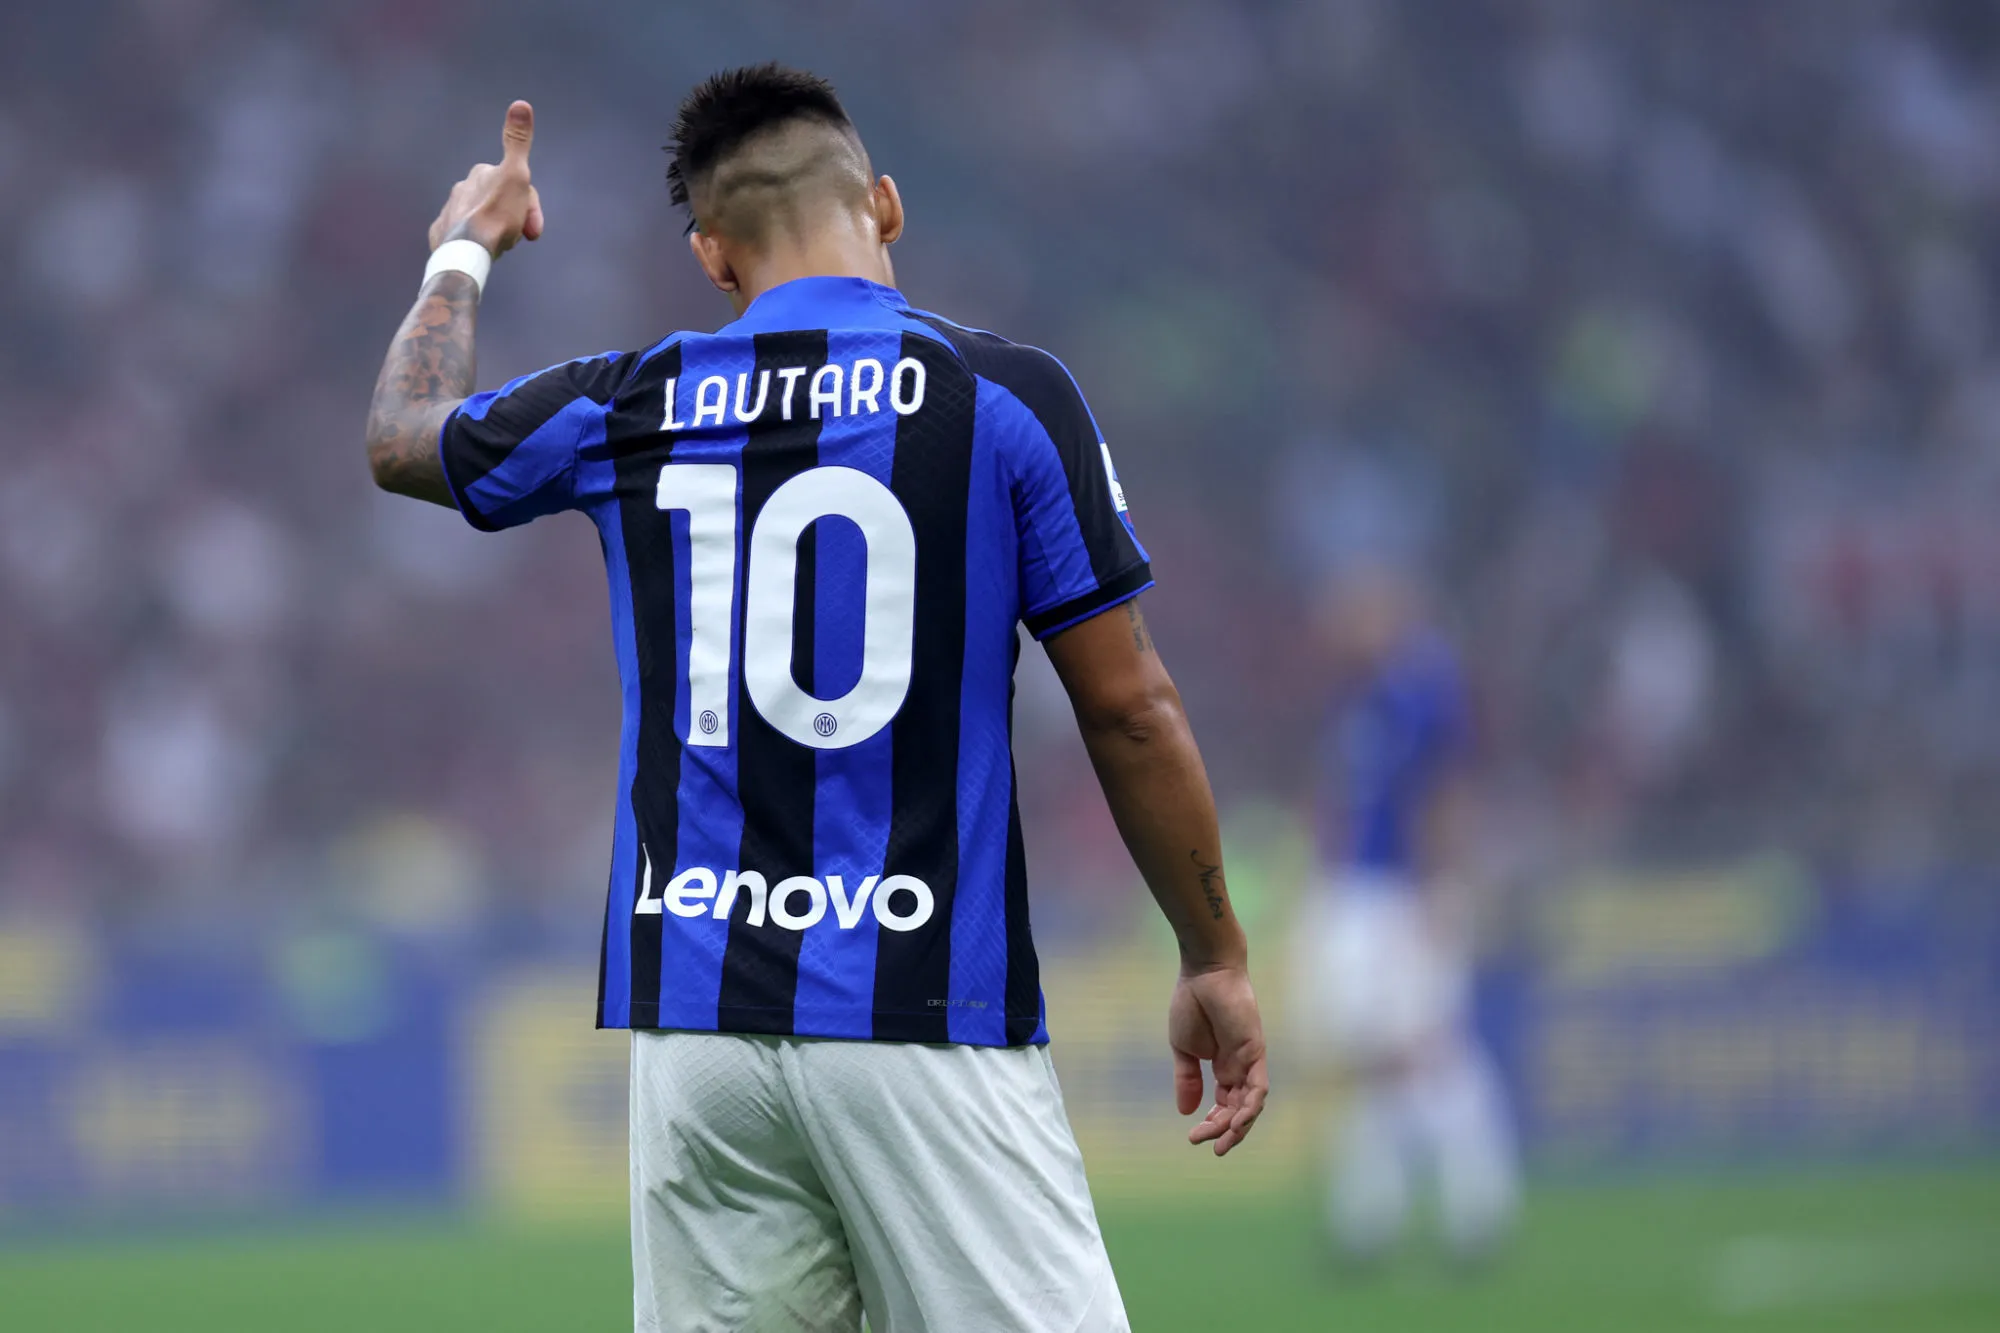 Pronostic Atalanta Bergame Inter Milan : Analyse, cotes et prono du match de Serie A